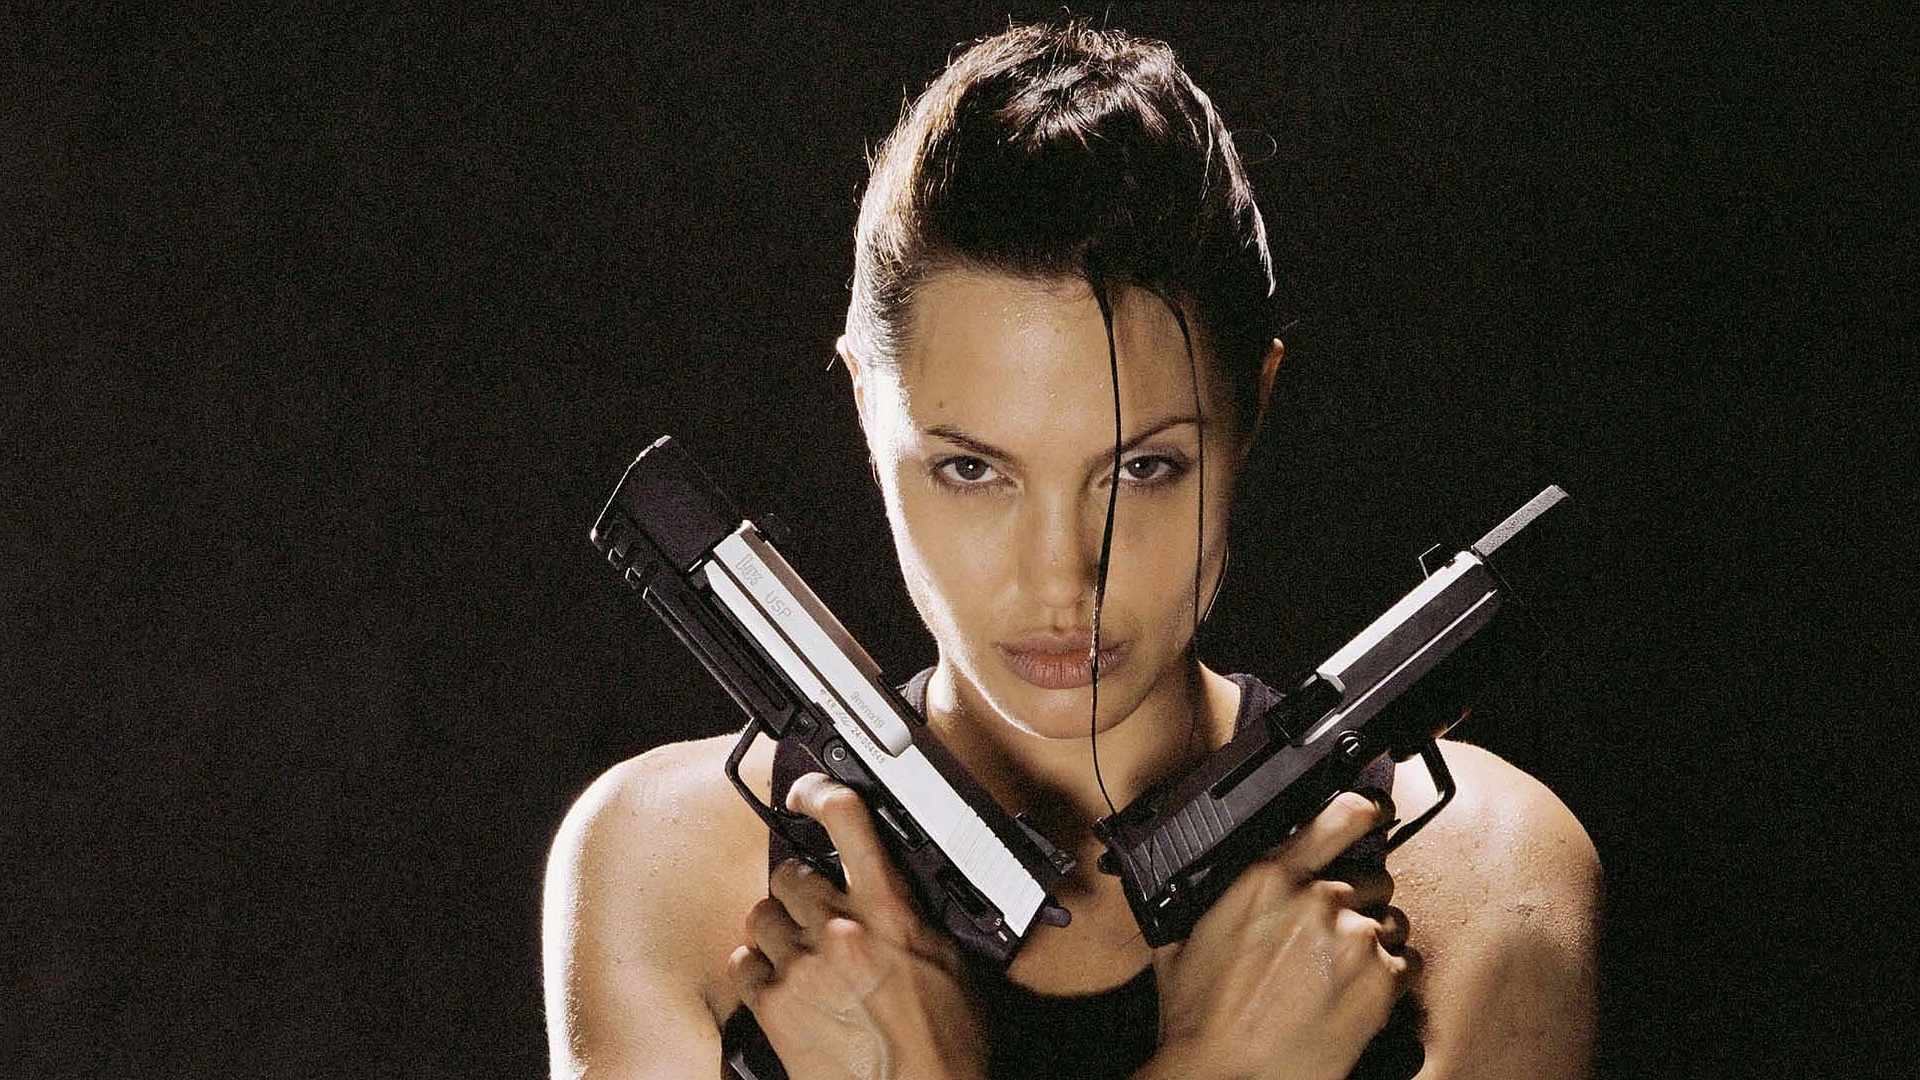 Lara Croft - Tomb Raider (2001) Movie Download 1080p Bluray